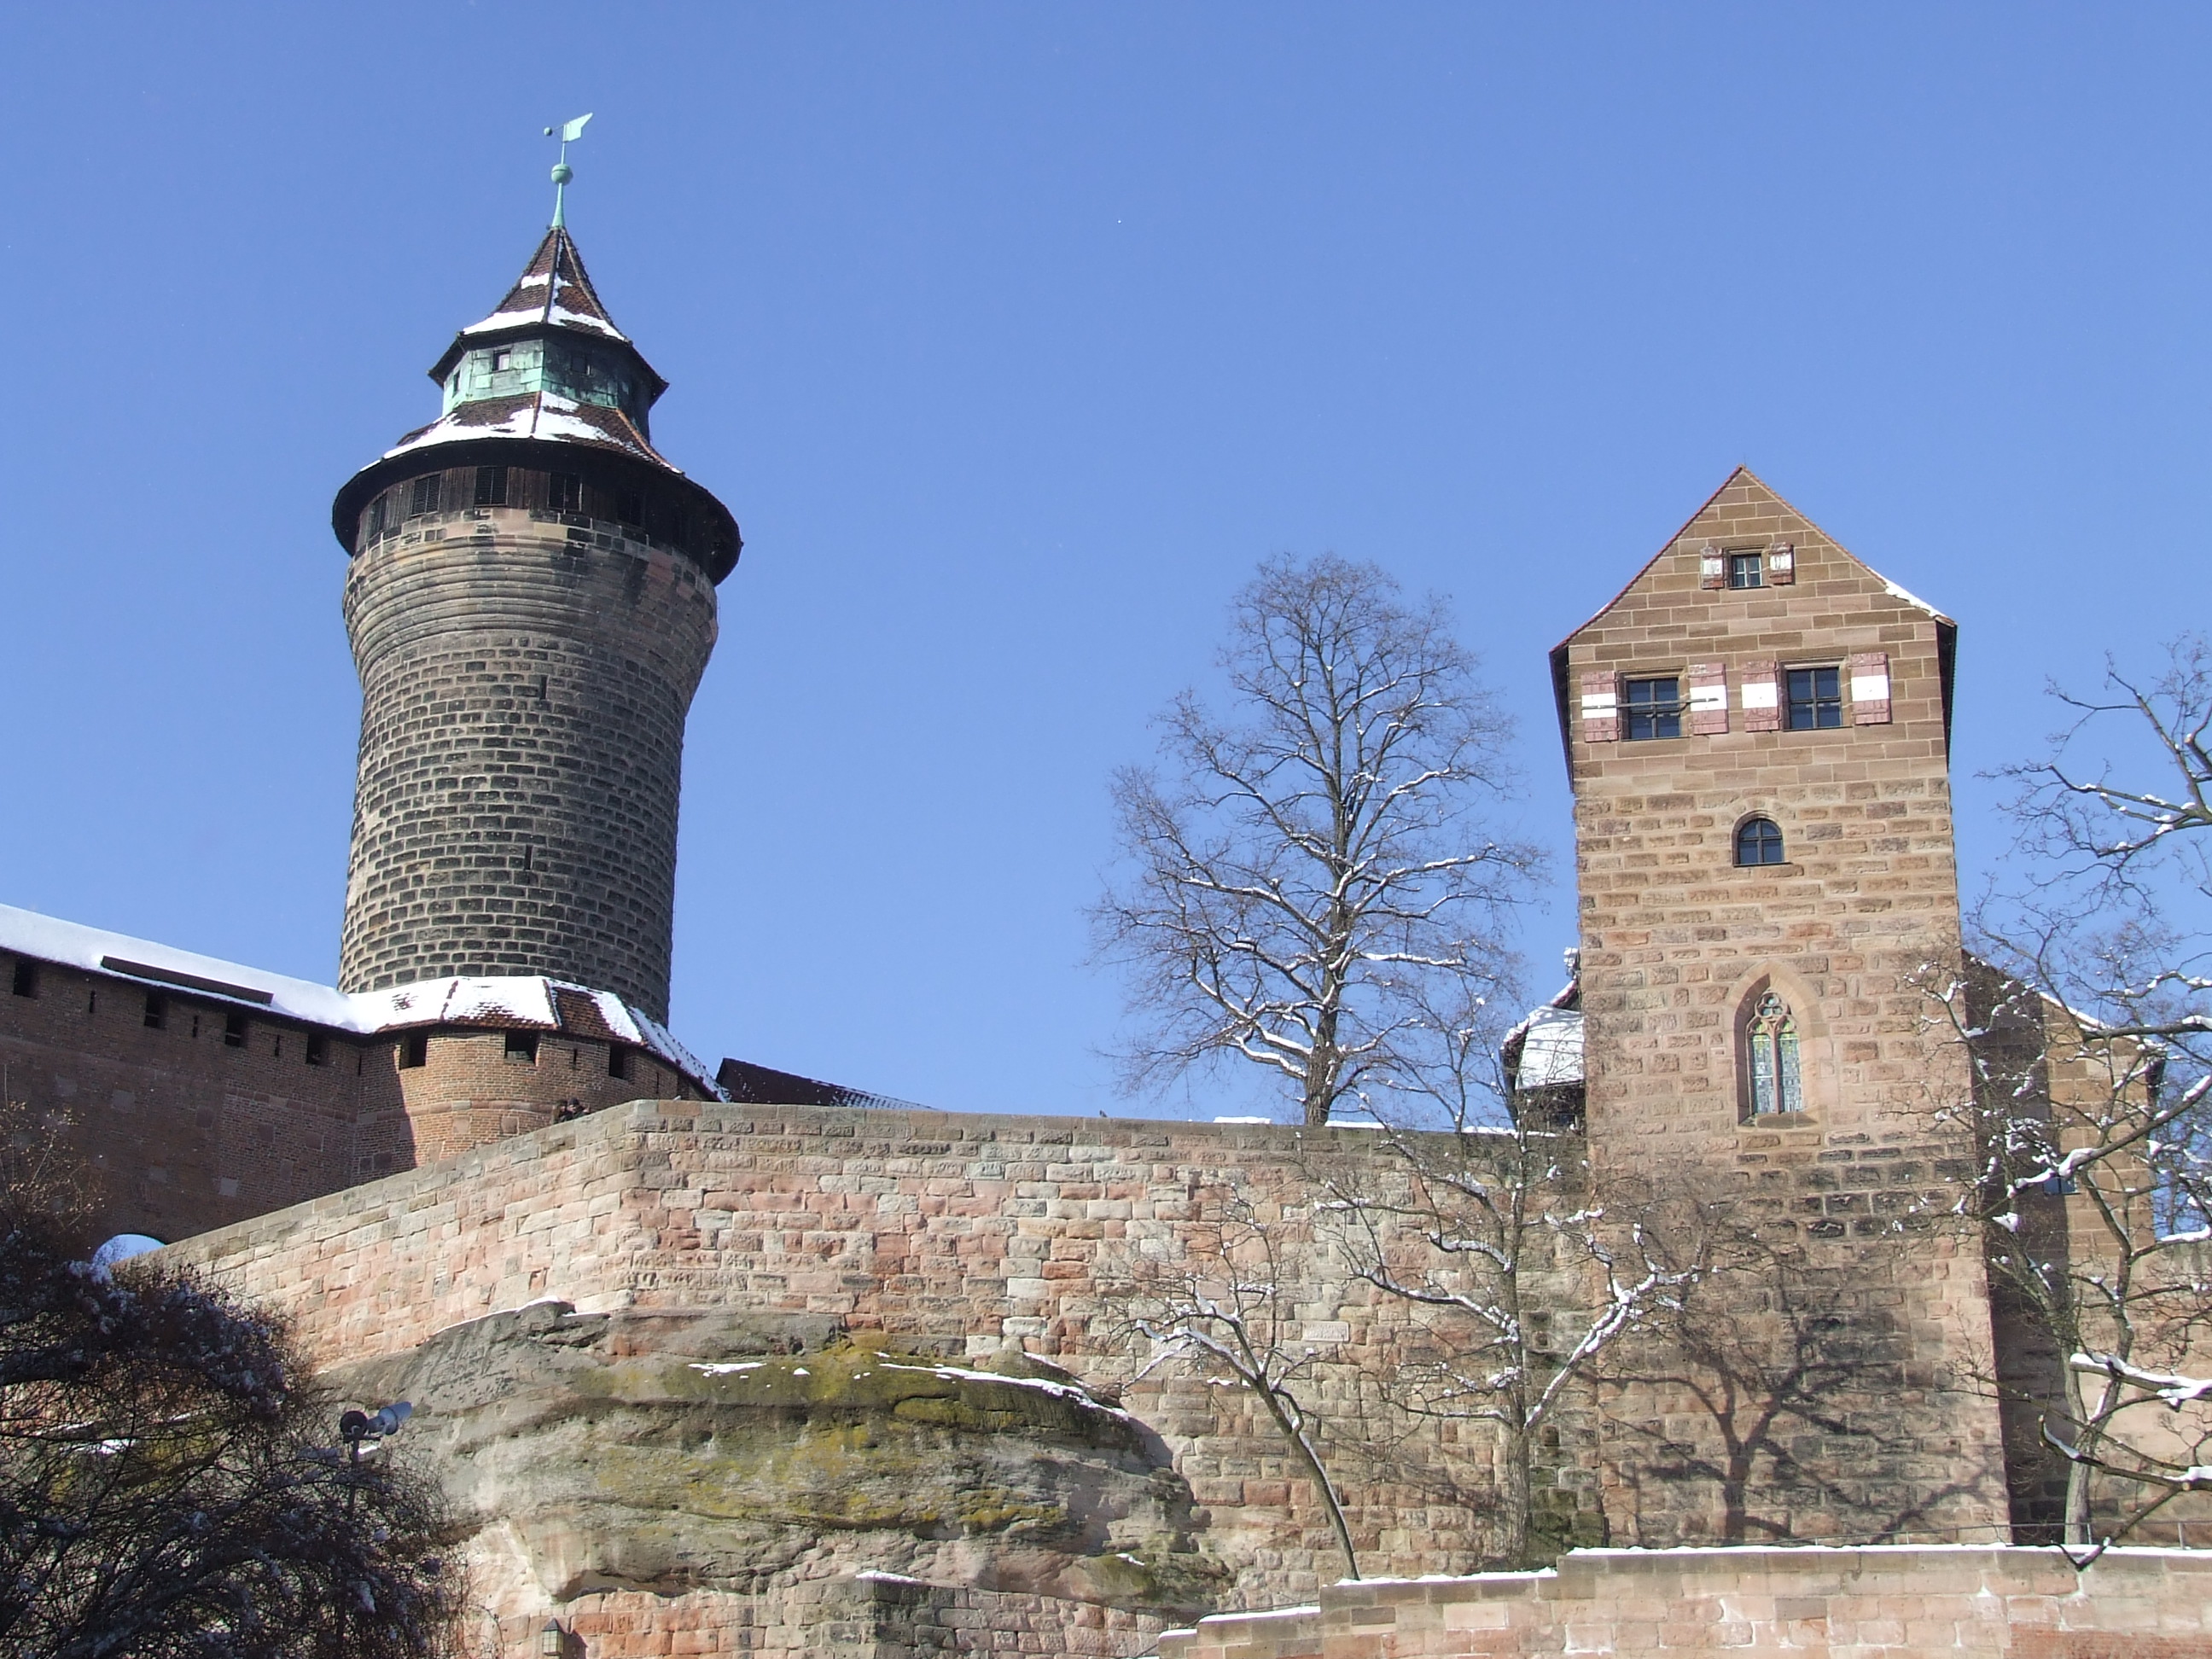 File:Nürnberg-Burggrafenburg-und-Sinwelturm.JPG - Wikimedia Commons